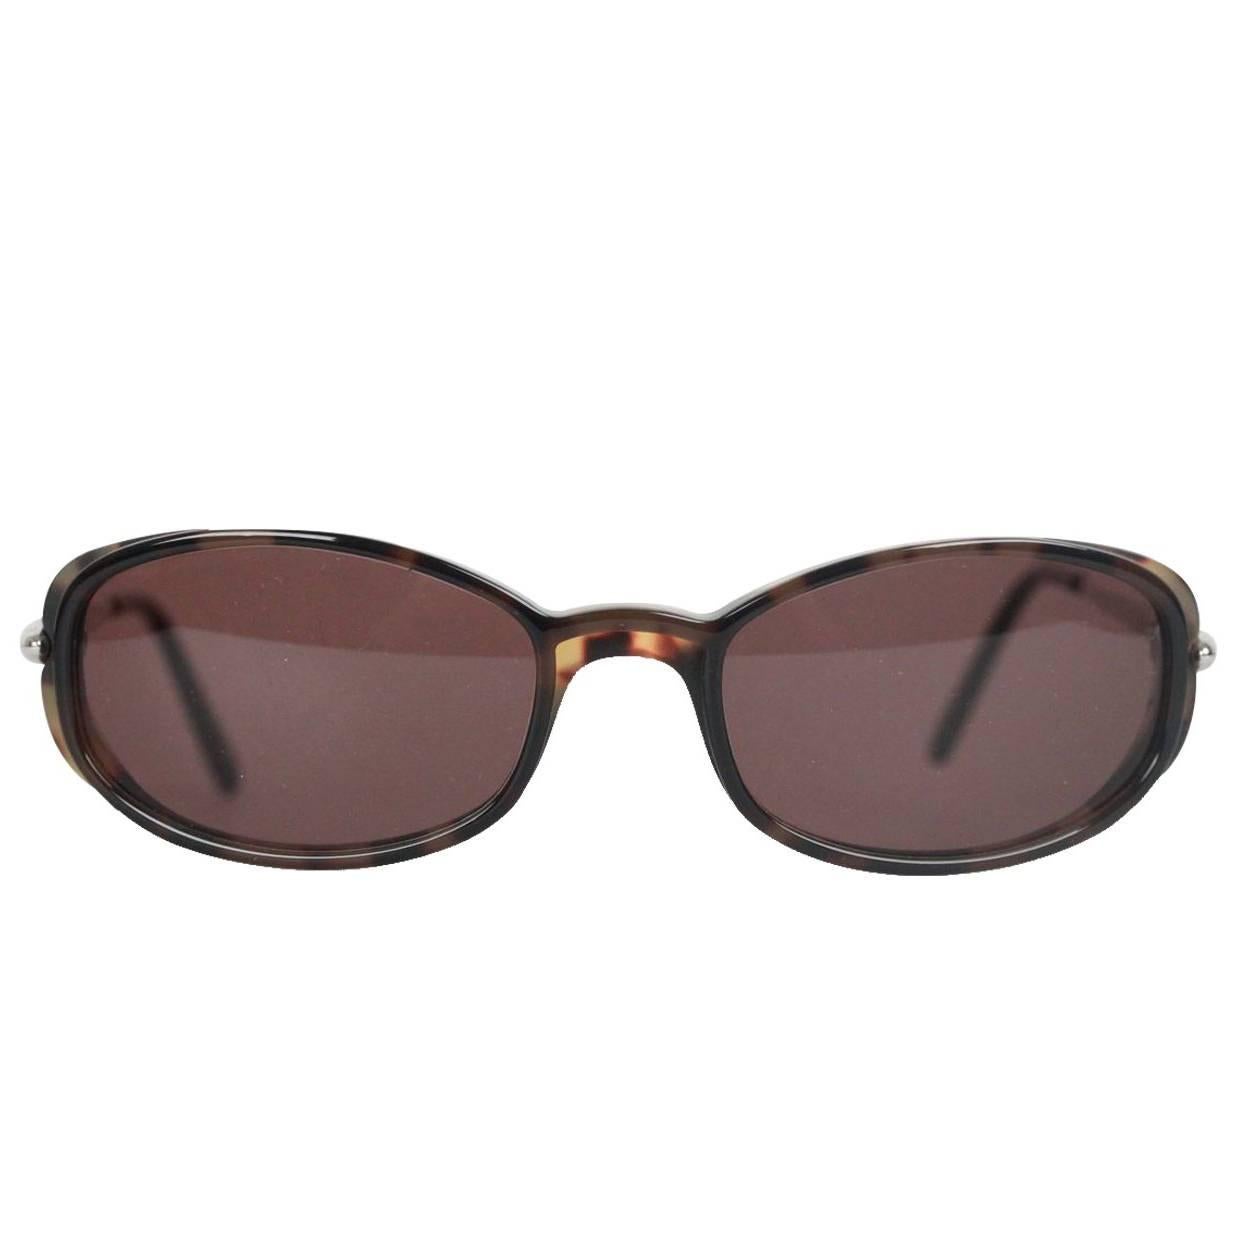 CARTIER Paris Brown Rectangular Small Sunglasses 53-19 135mm NOS